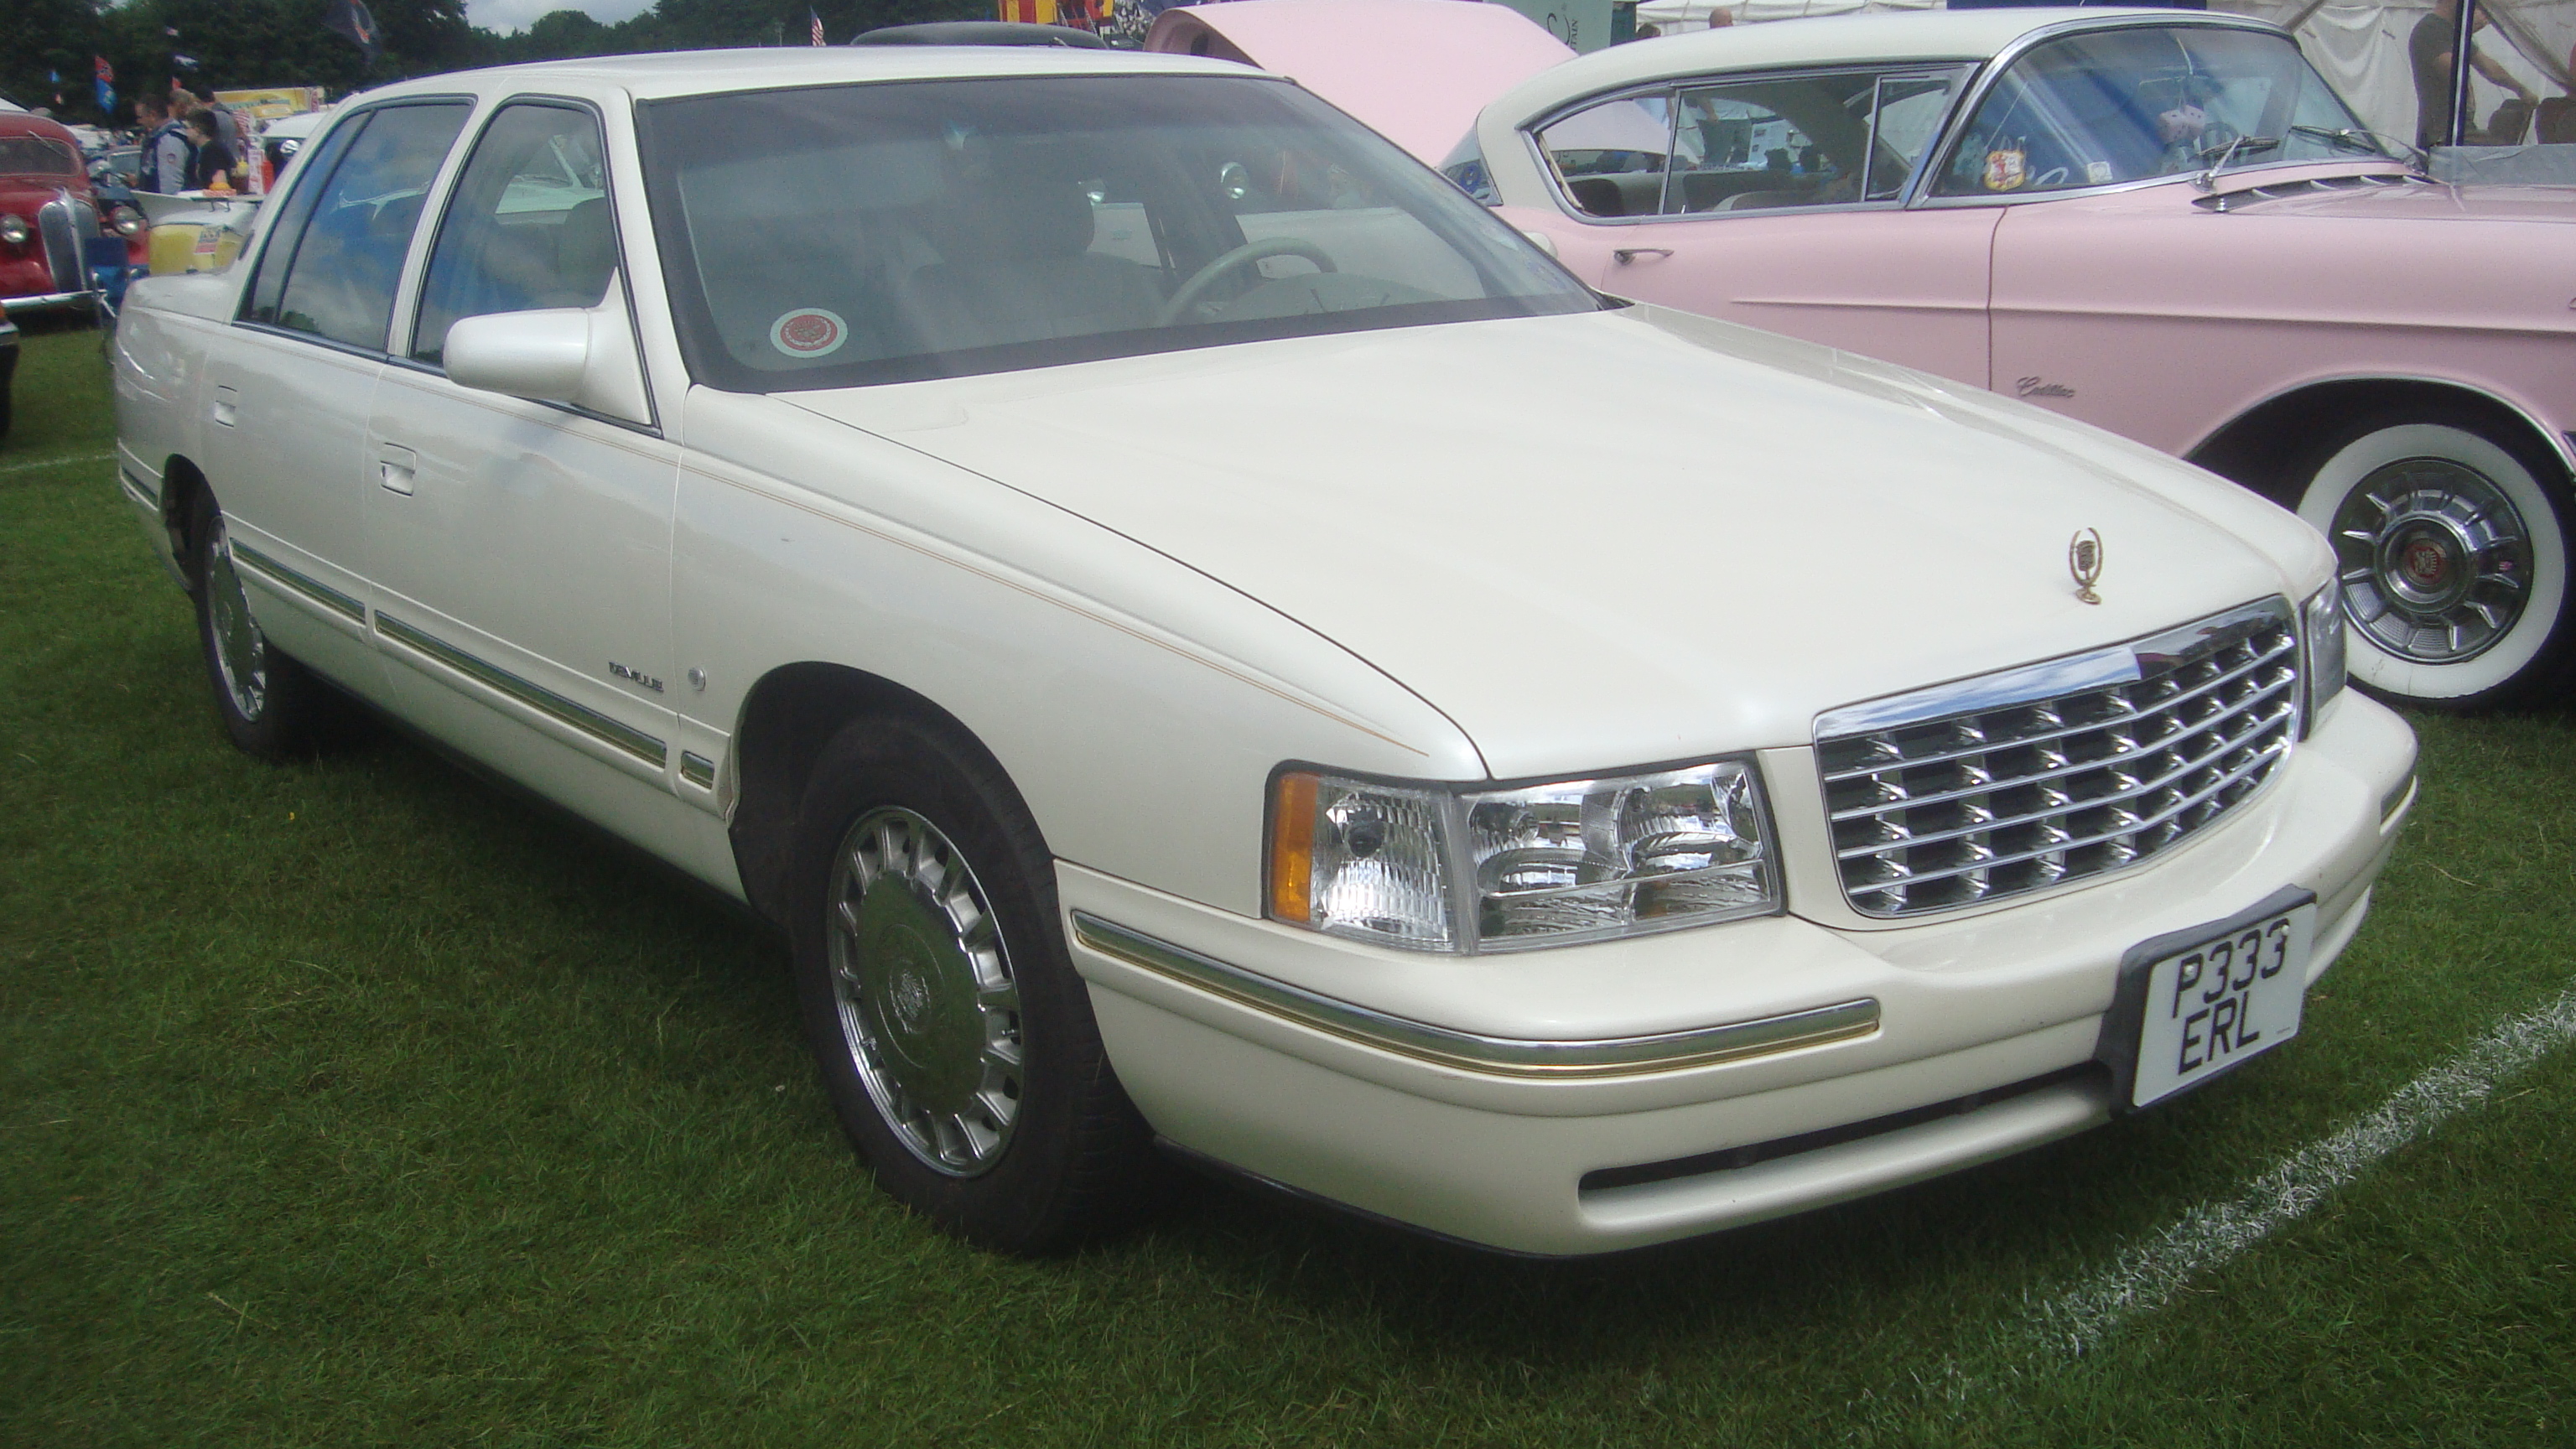 File:1999 Cadillac DeVille V8.jpg - Wikimedia Commons